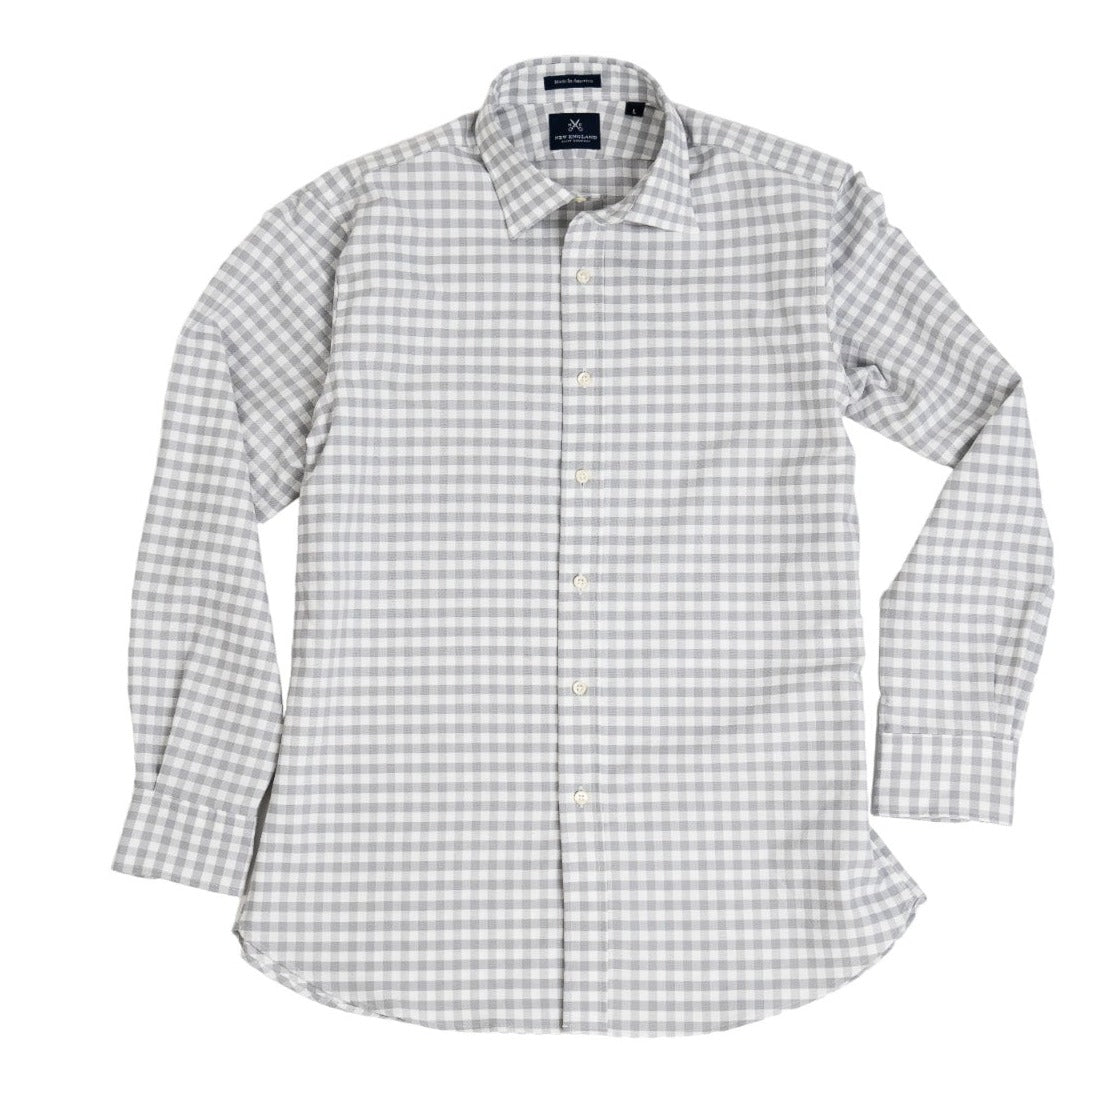 Weston Spread Collar Grey/White Check Oxford Sport Shirt